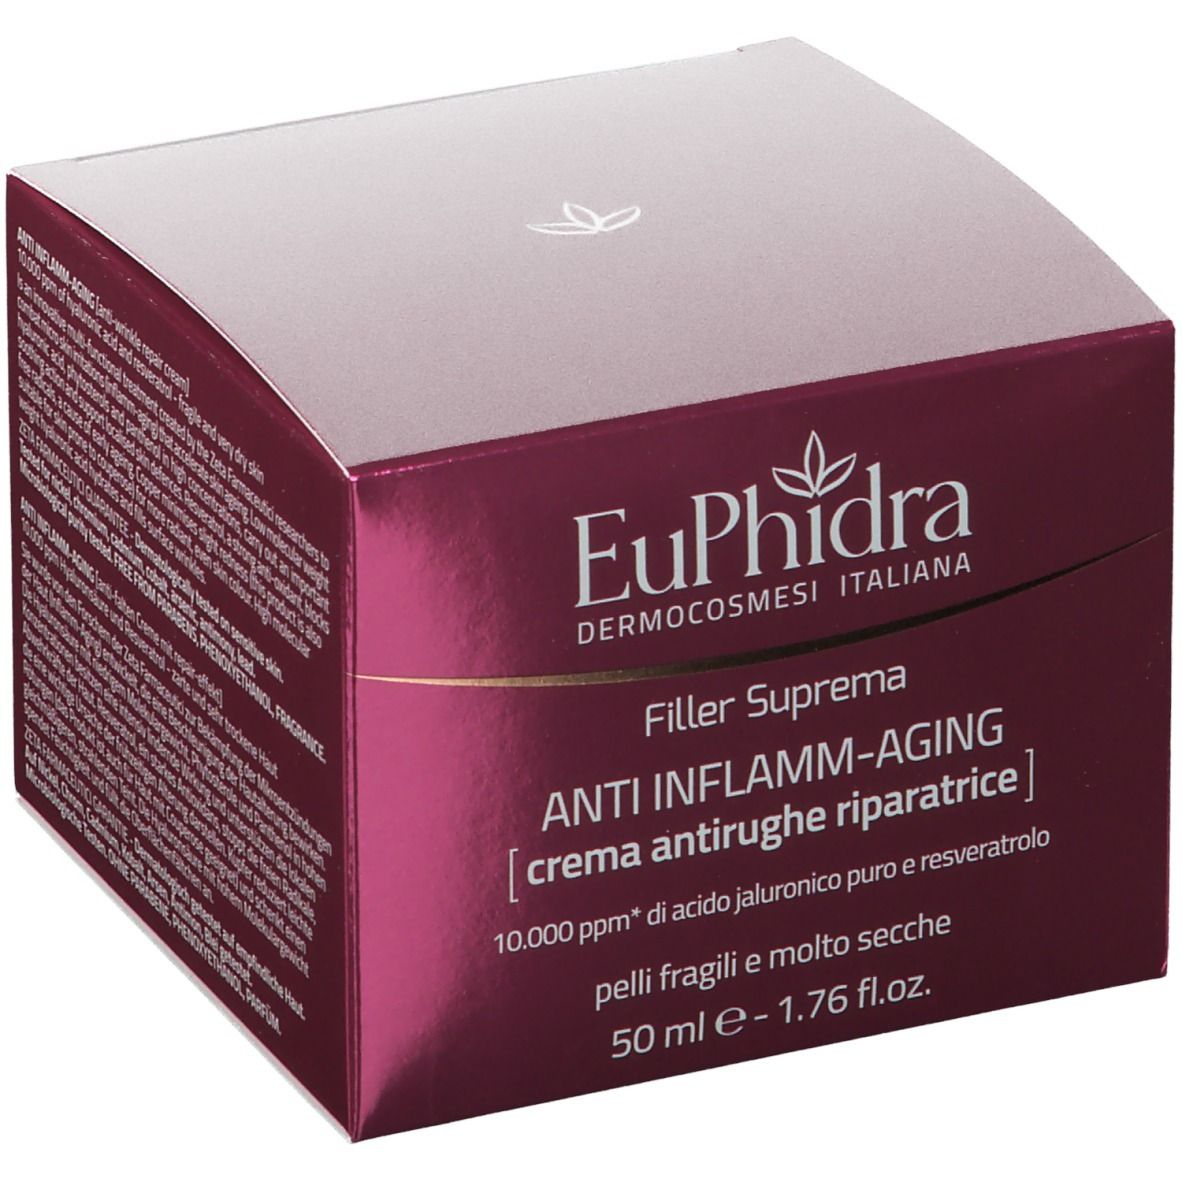 EuPhidra Anti-Entzündungs-Aging Anti-Falten-Reparatur-Creme